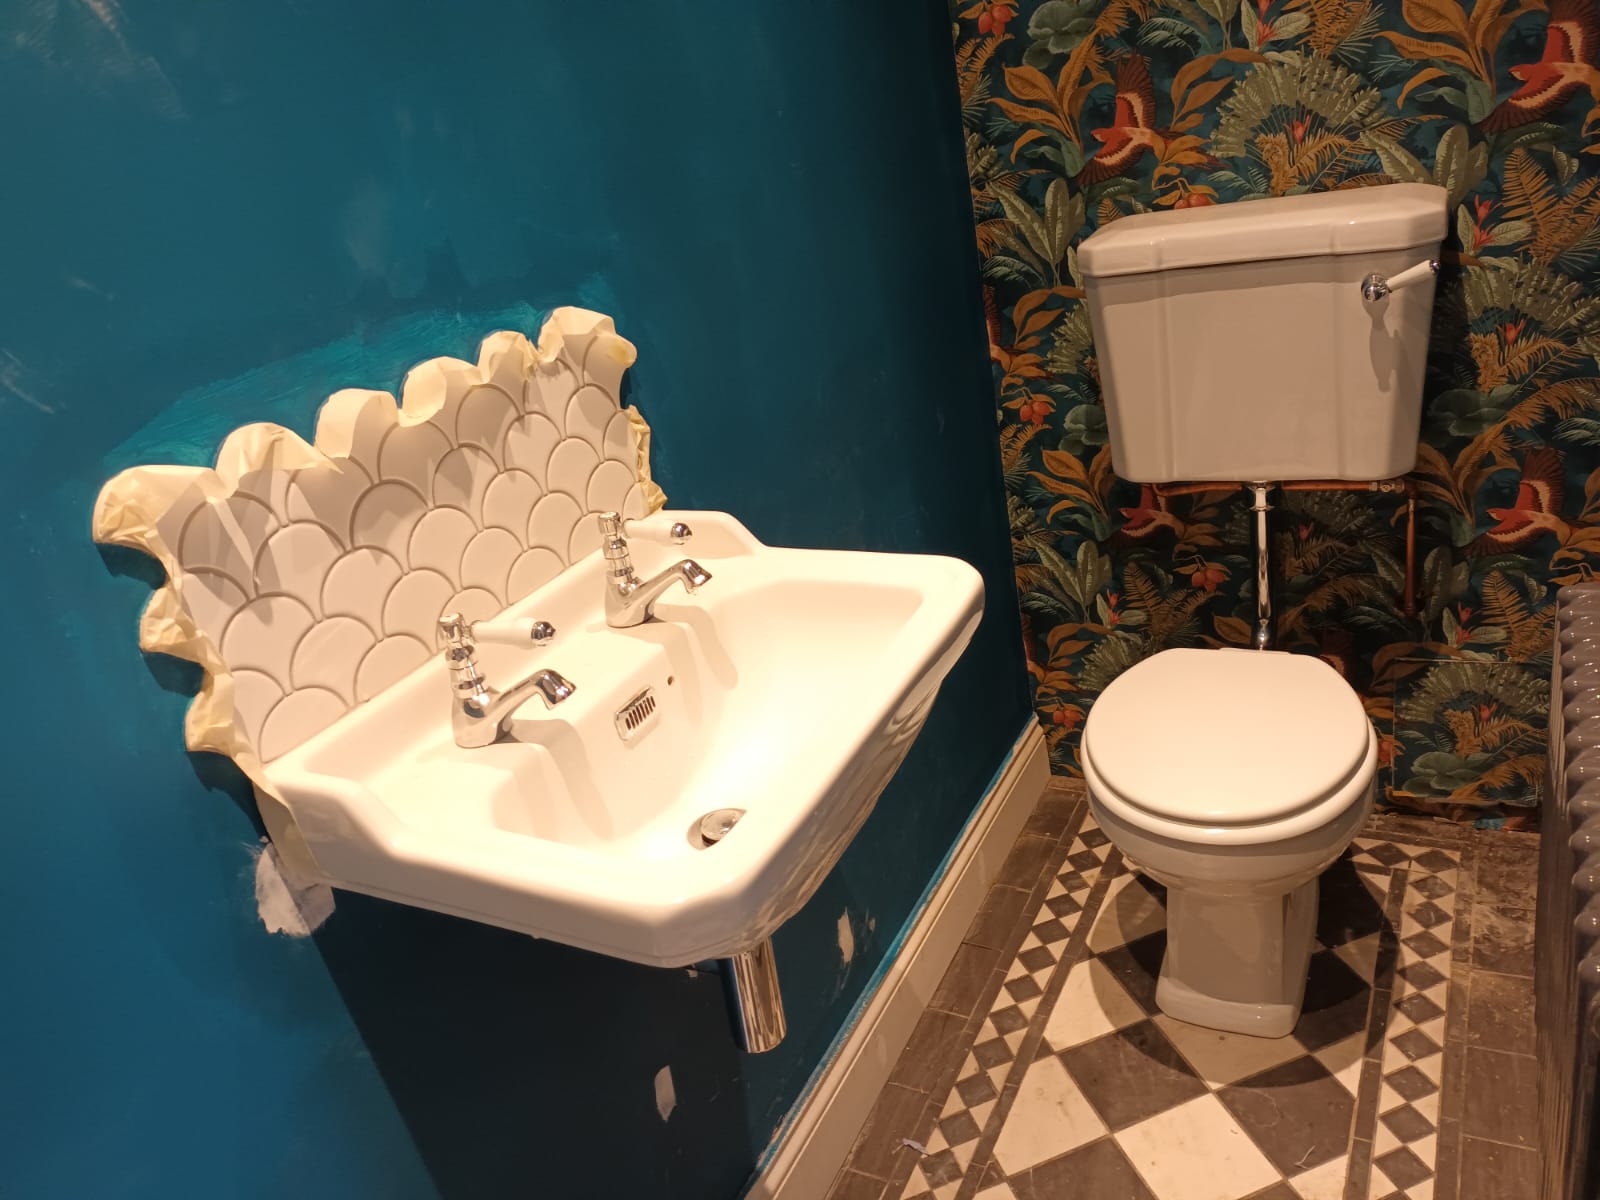 Bathroom installations